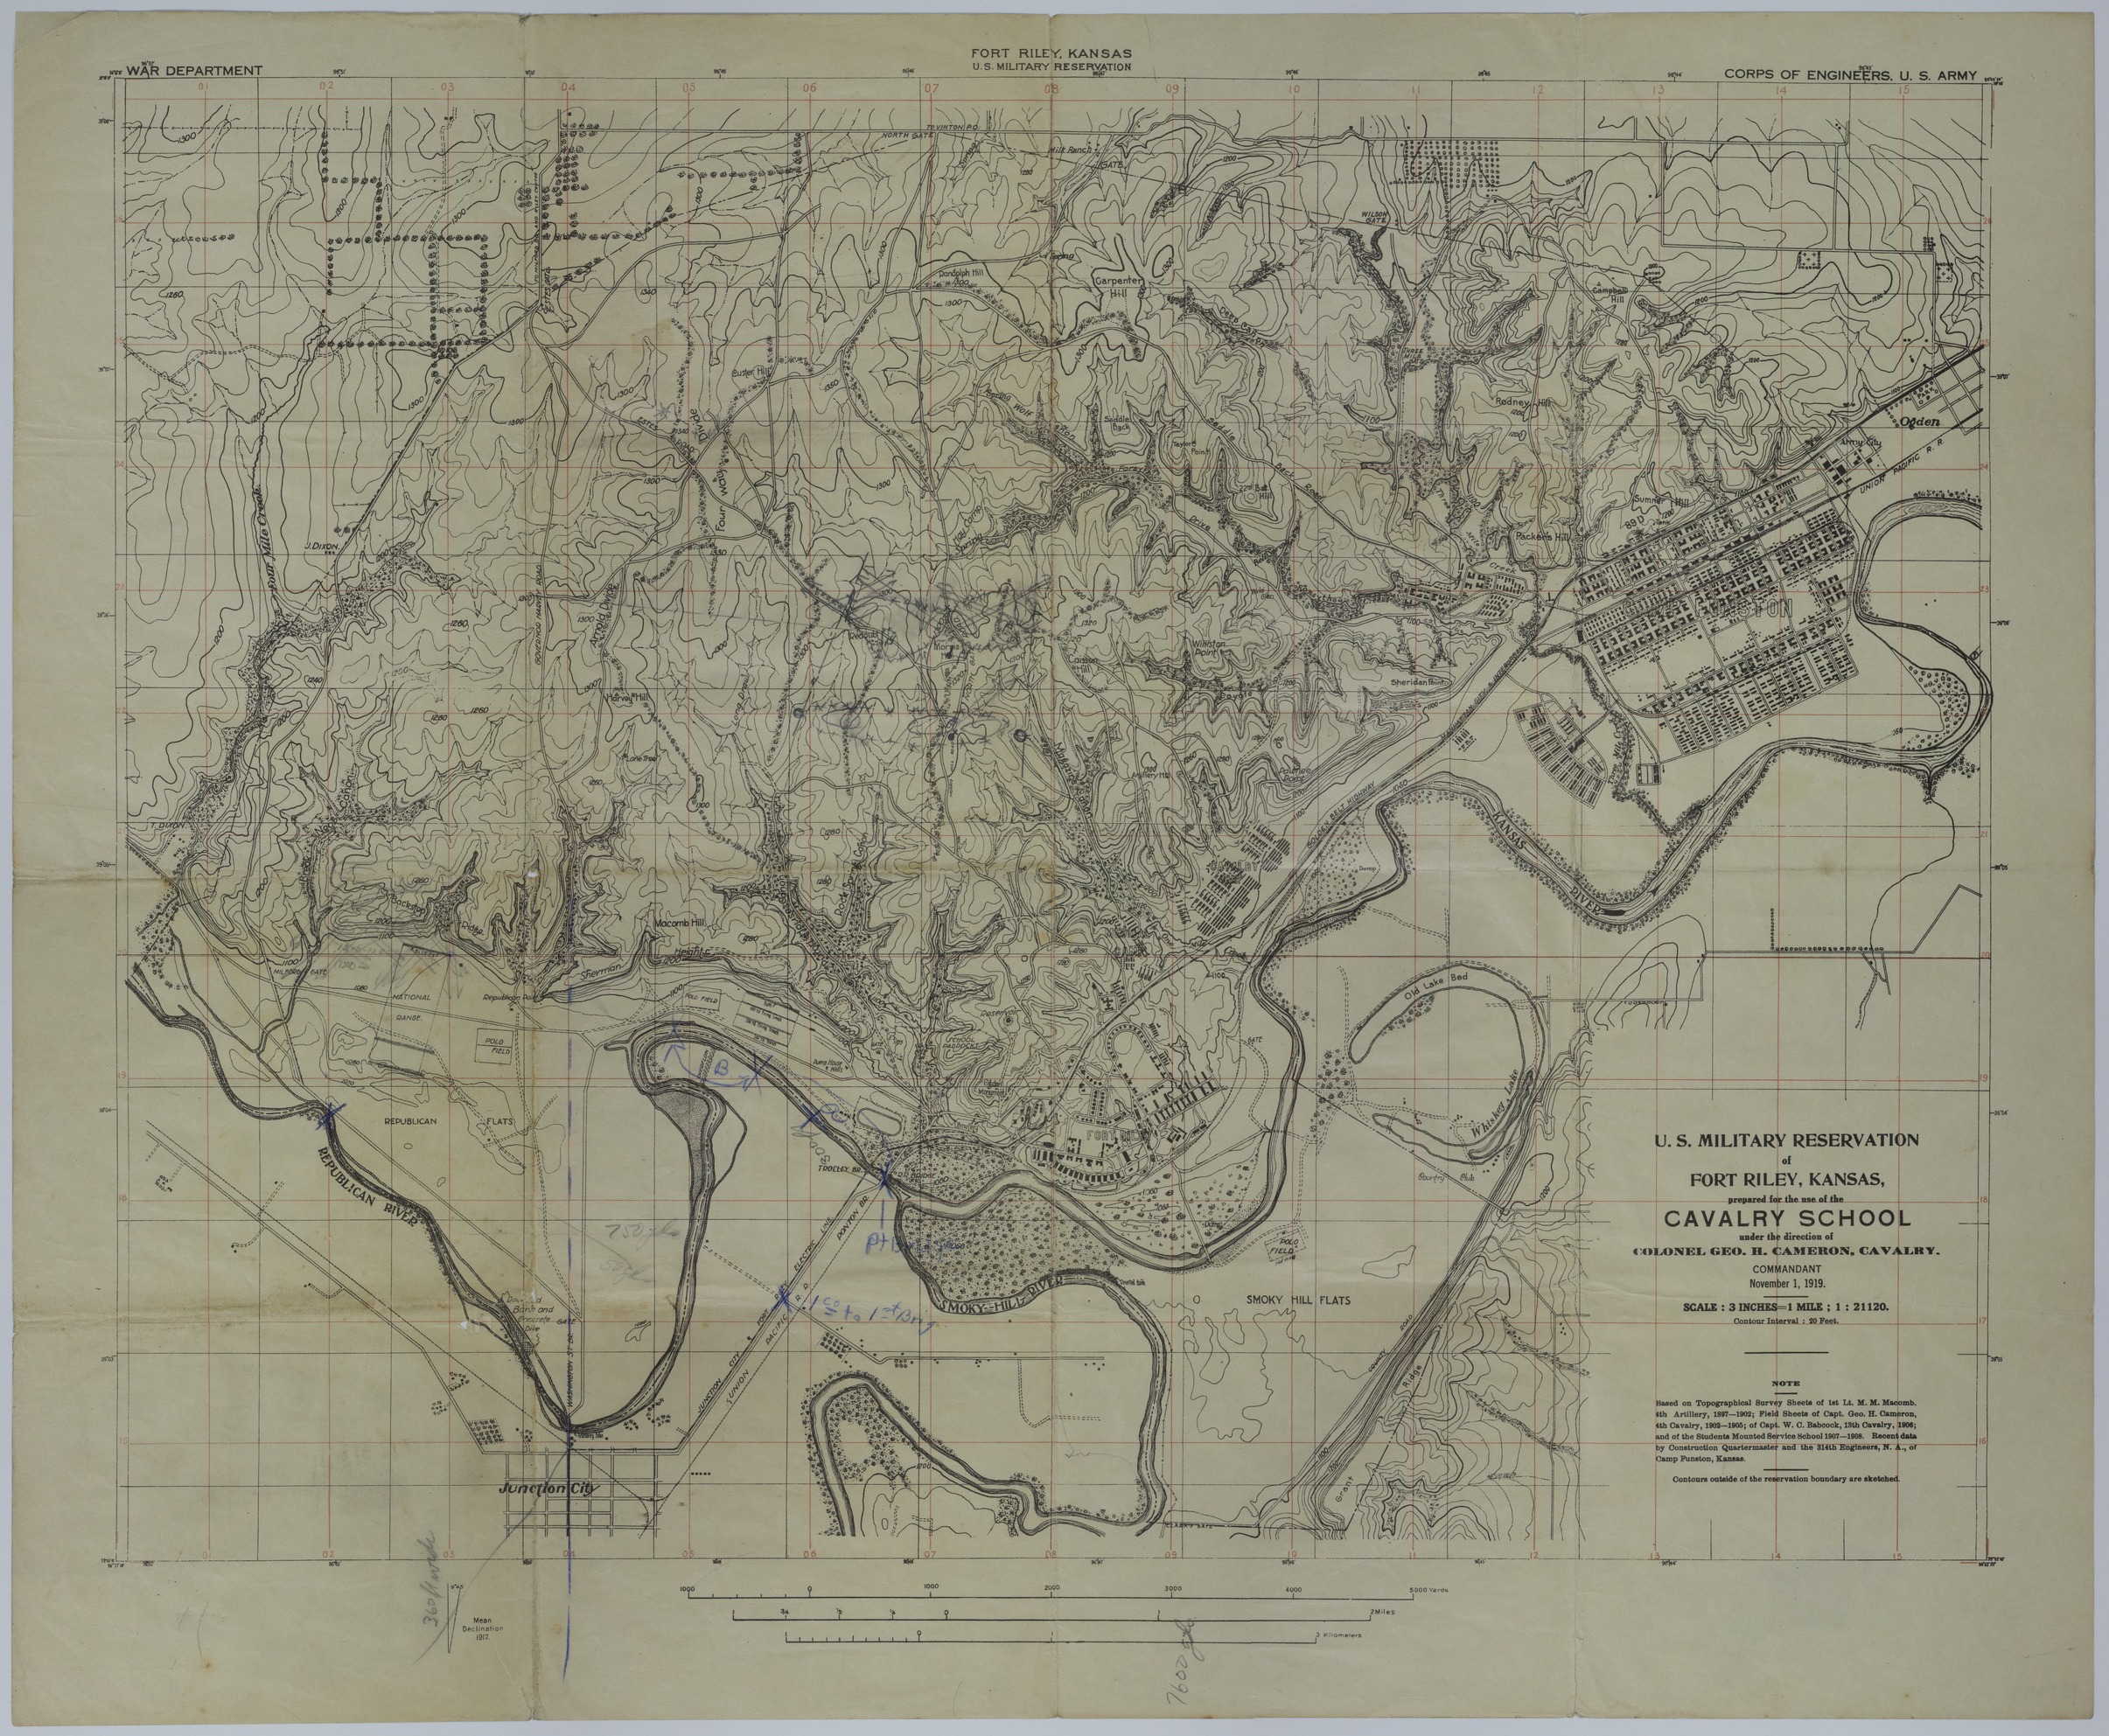 Map of Fort Riley, Kansas